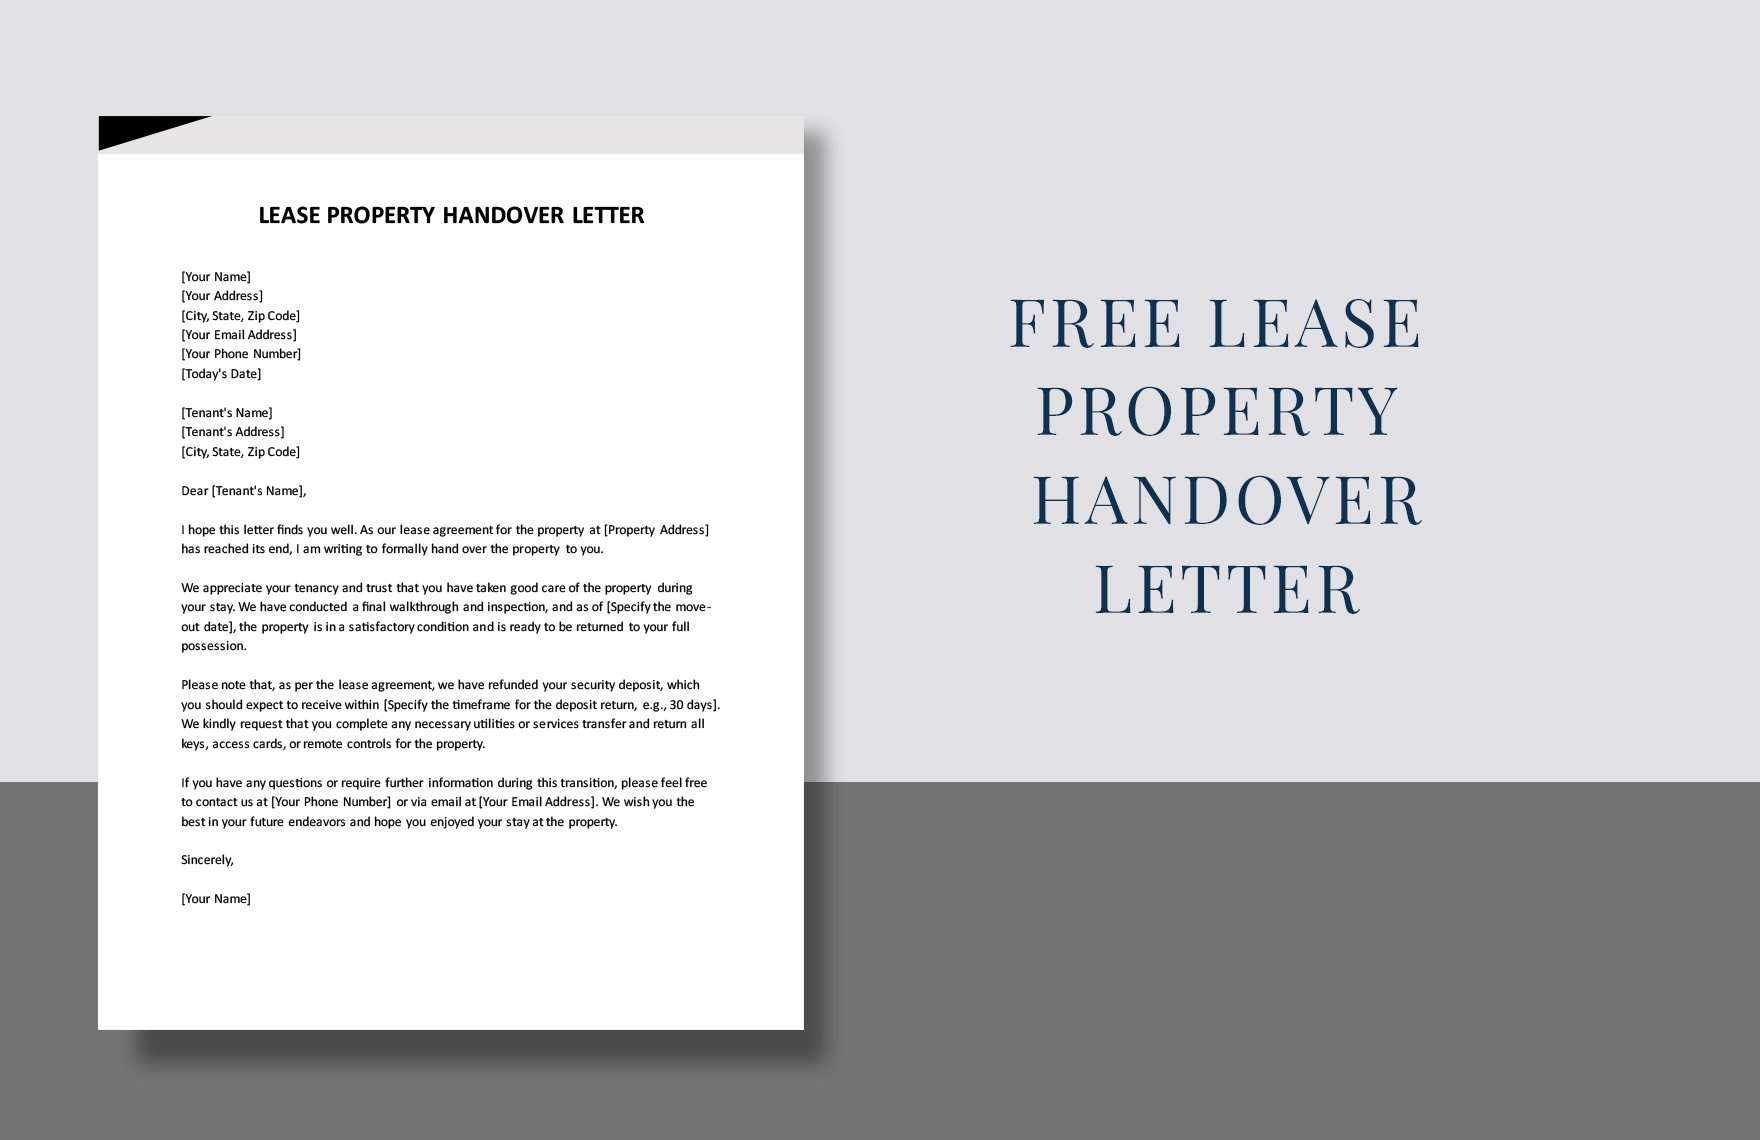 Lease Property Handover Letter